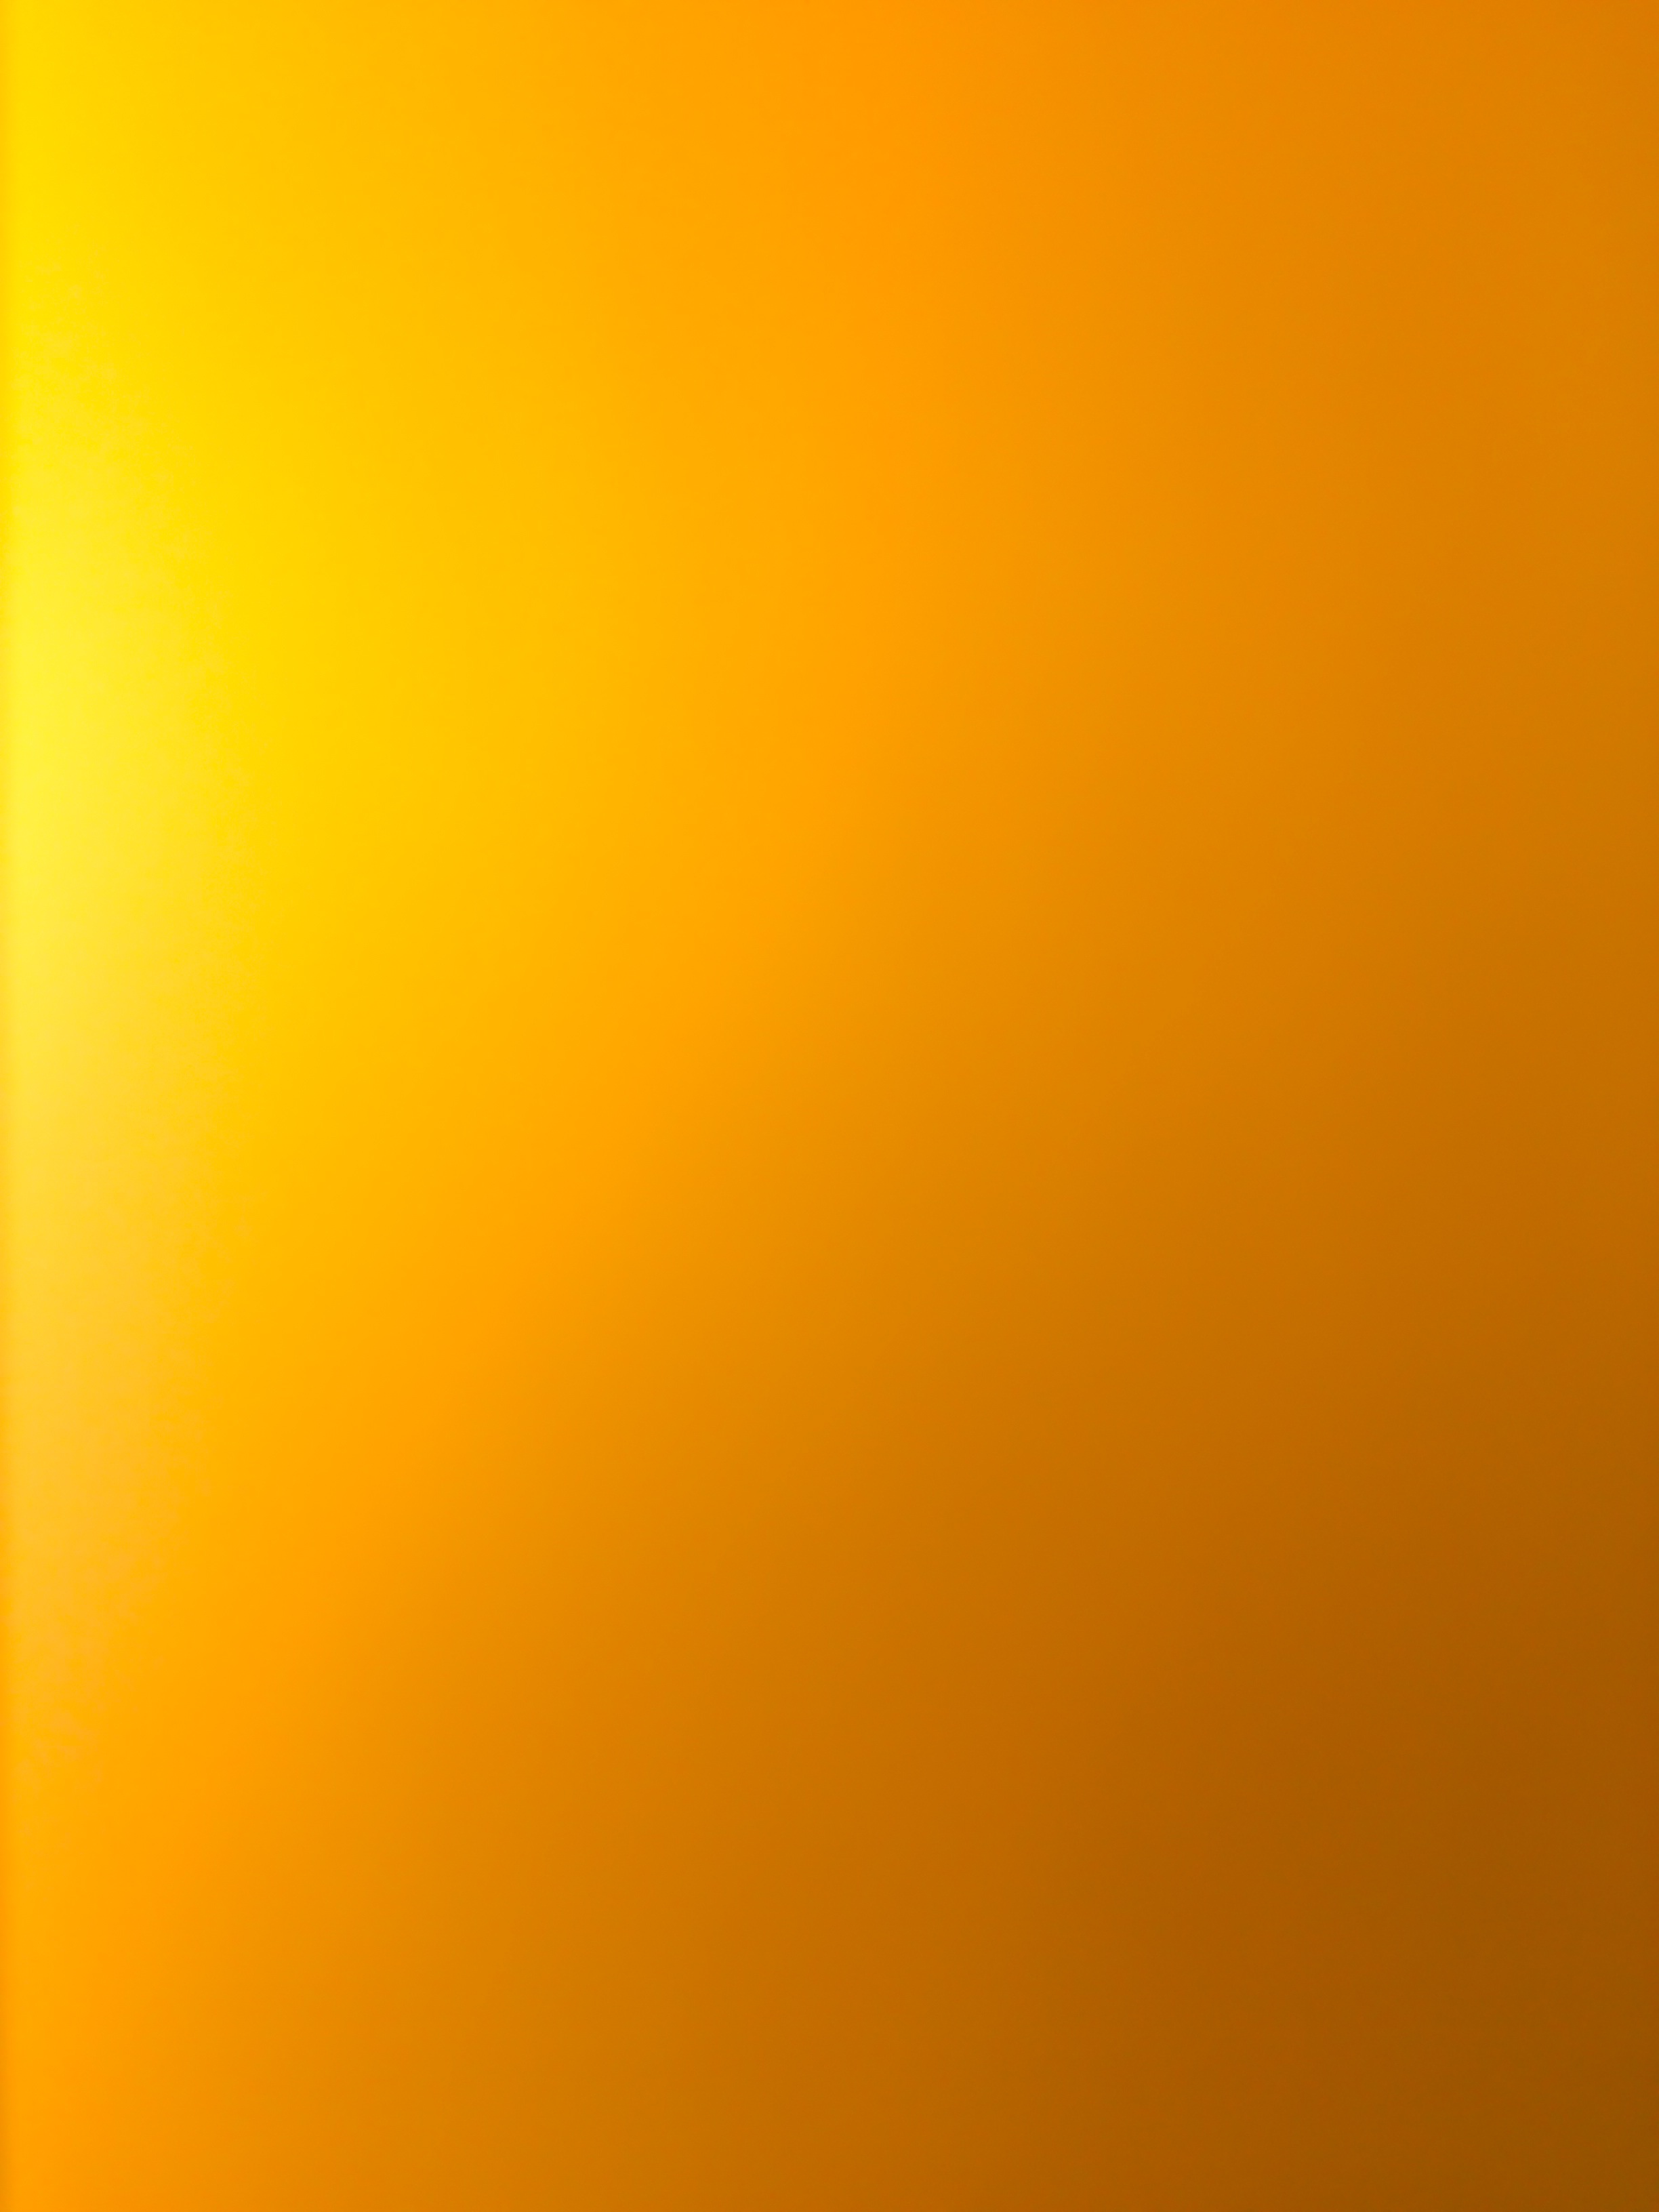 wallpaper kuning,orange,yellow,amber